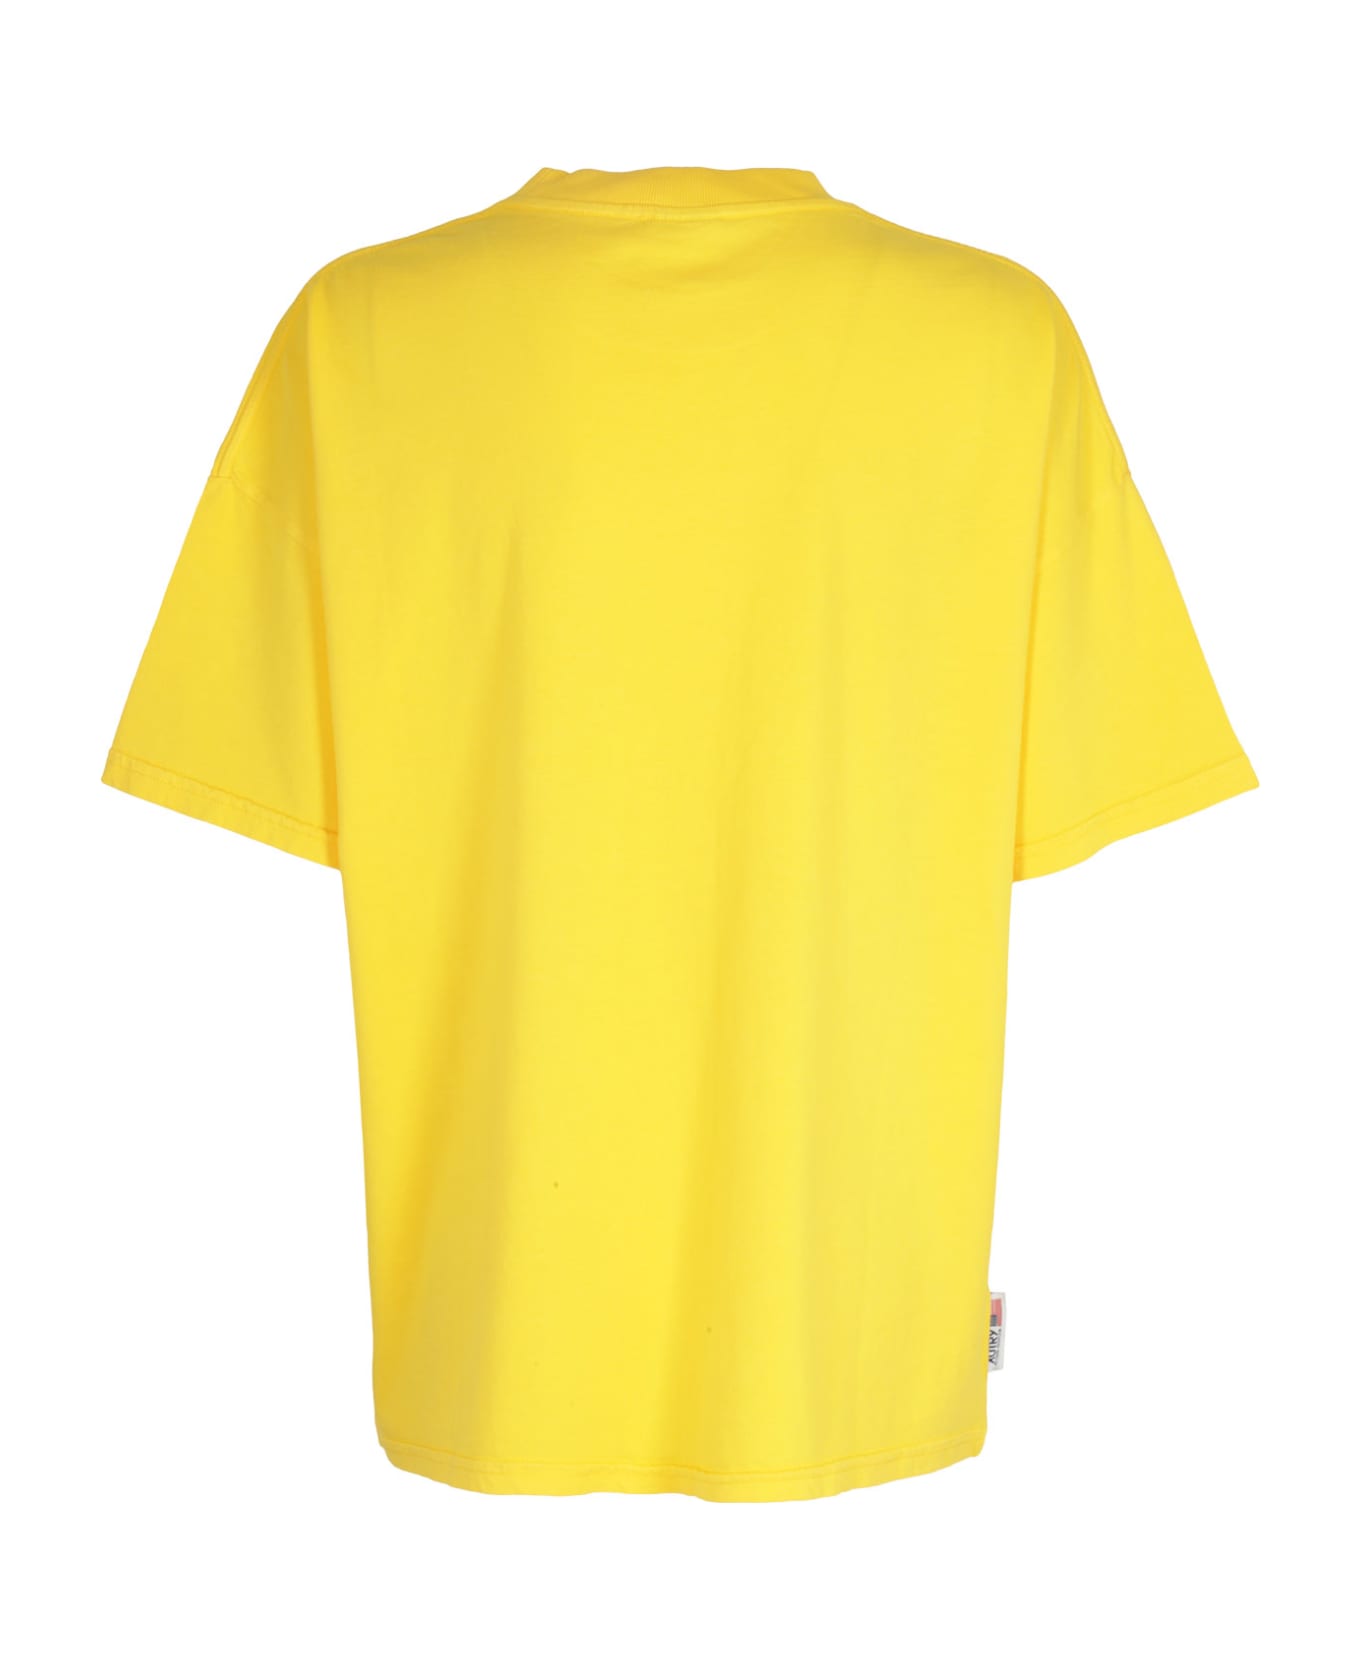 Autry T-shirt Aerobic - Tinto Yellow Tシャツ